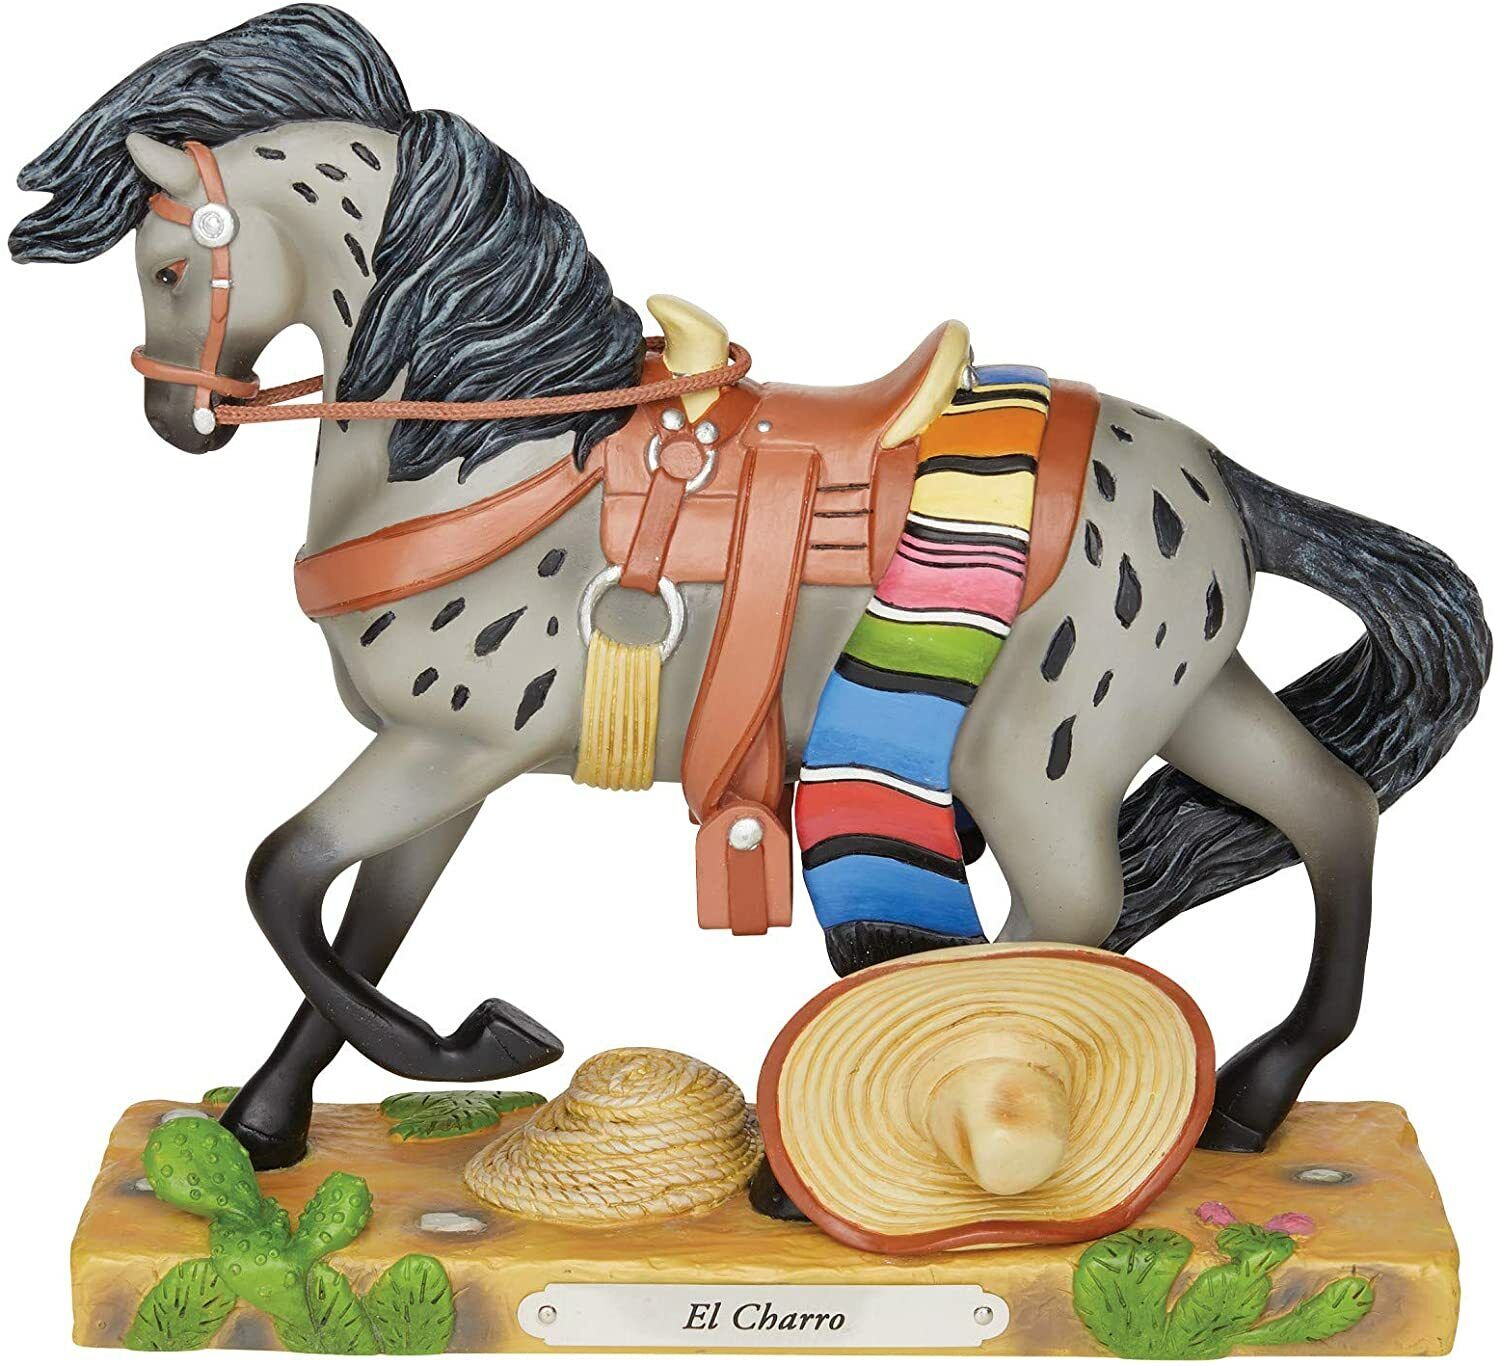 Enesco Trail of Painted Ponies EL CHARRO Figurine 1E 6008840 NEW IN BOX 2021